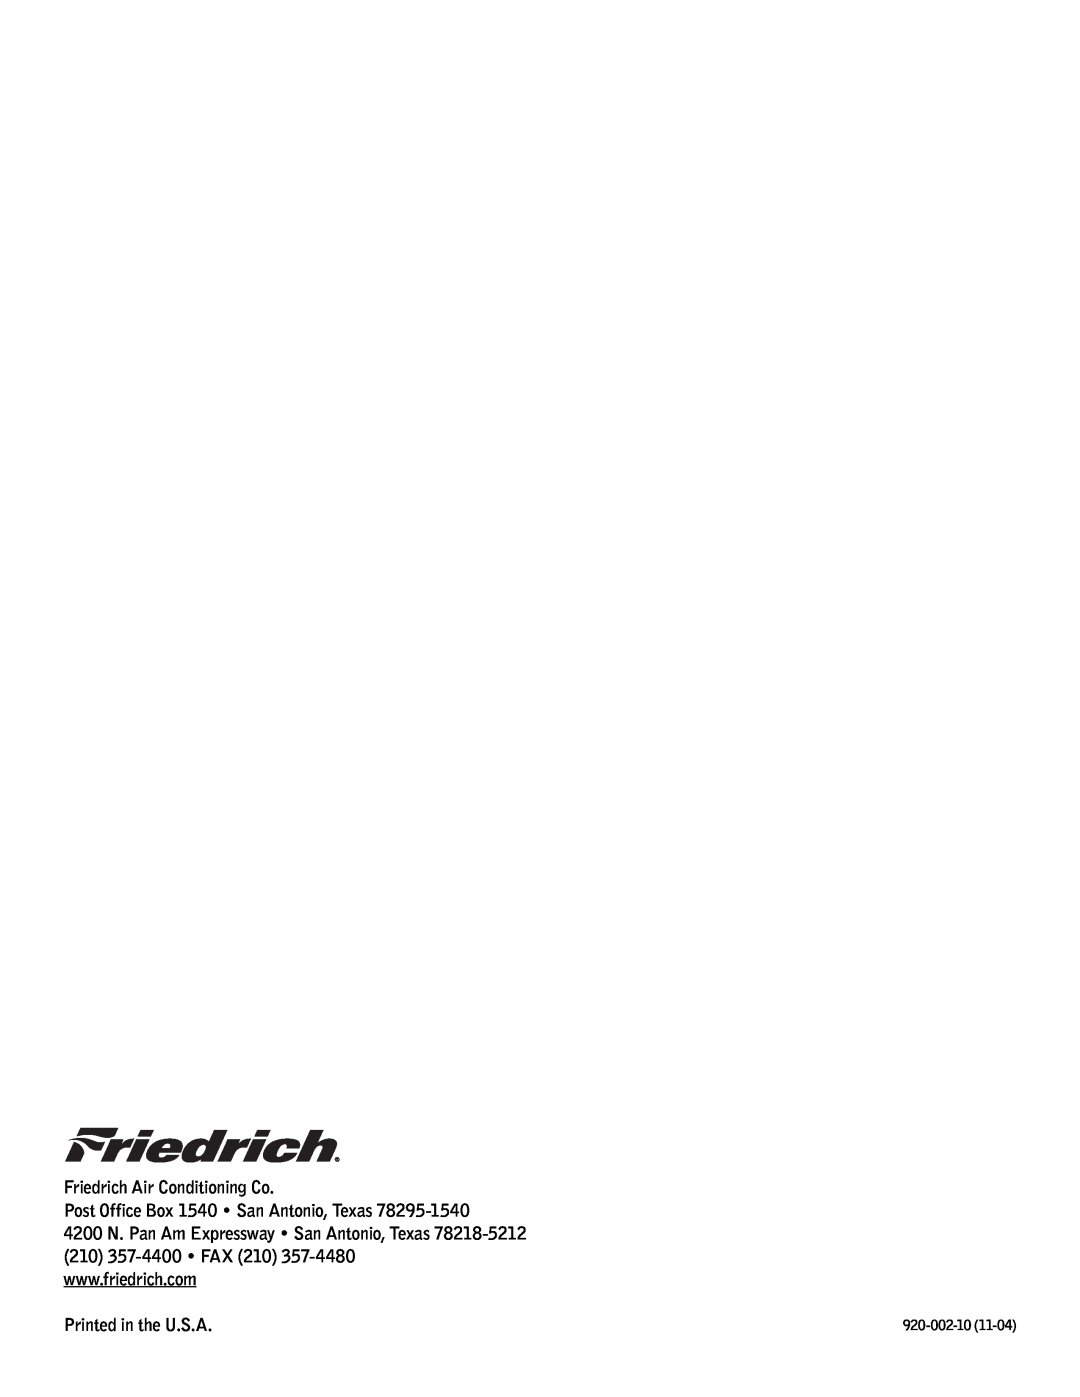 Friedrich SL36, SL25, SL28 manual Friedrich Air Conditioning Co, Post Office Box 1540 San Antonio, Texas, 920-002-10 